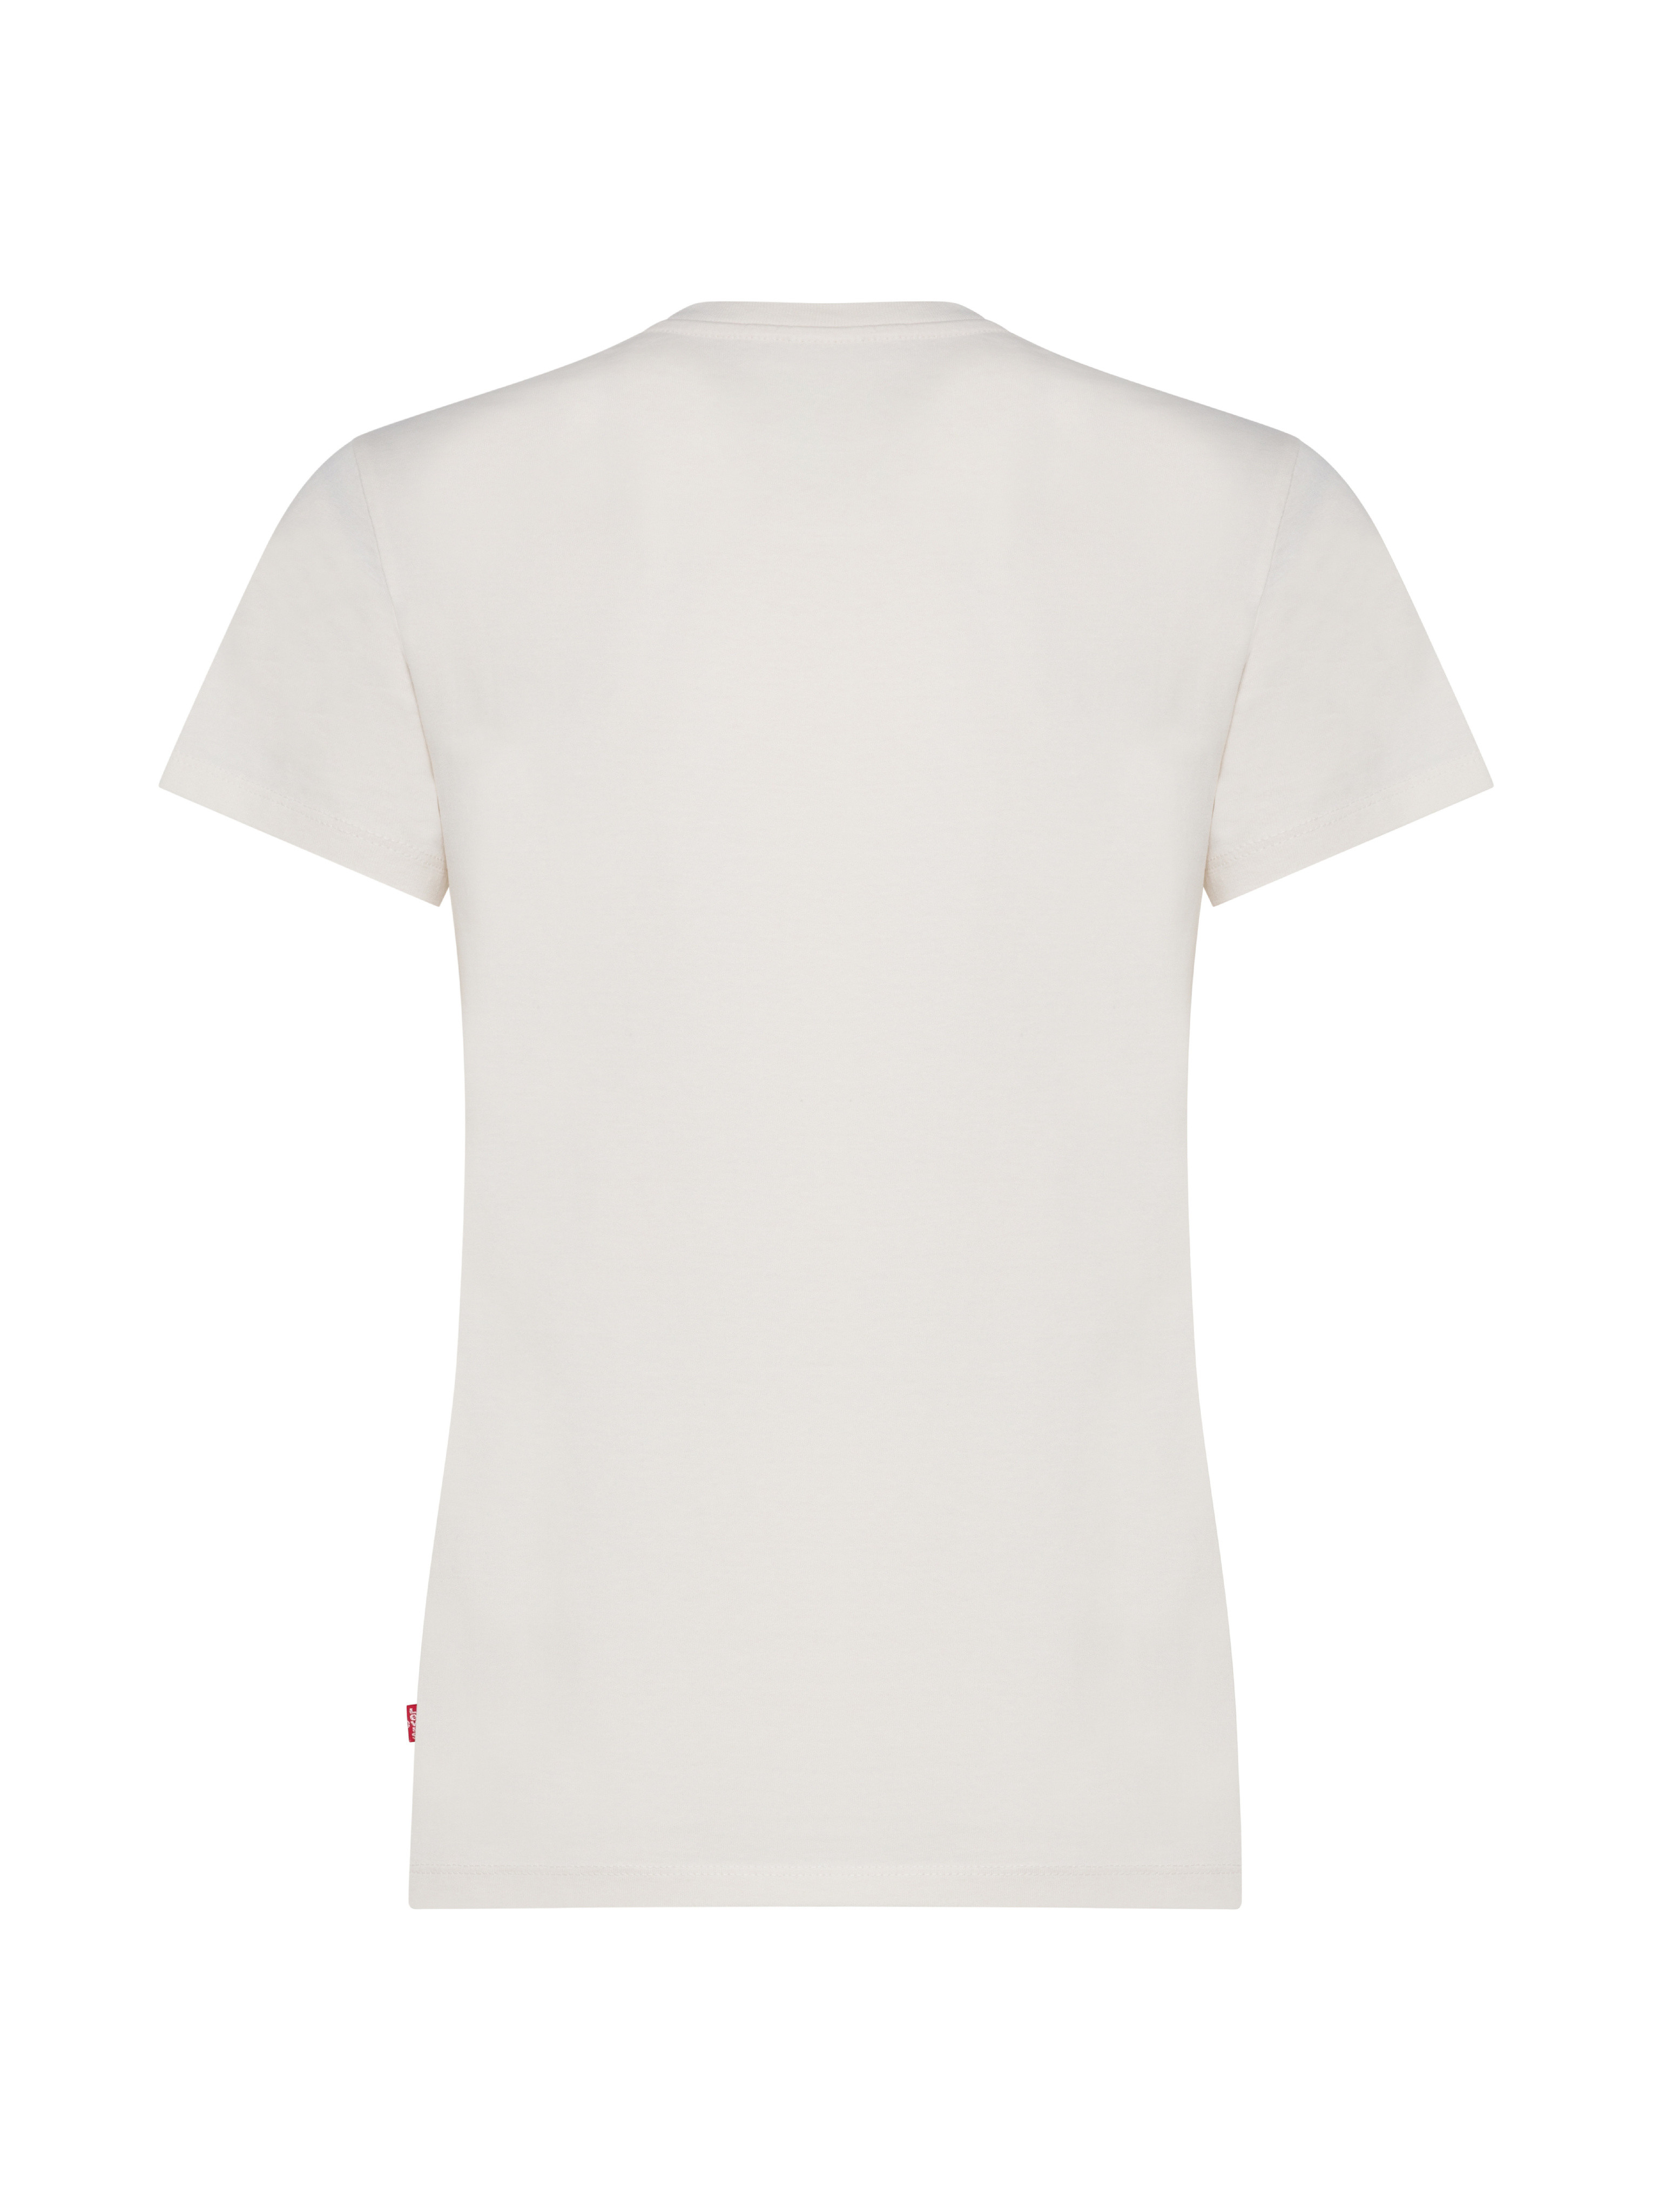 Levi's - T-shirt con logo floreale, Bianco, large image number 1